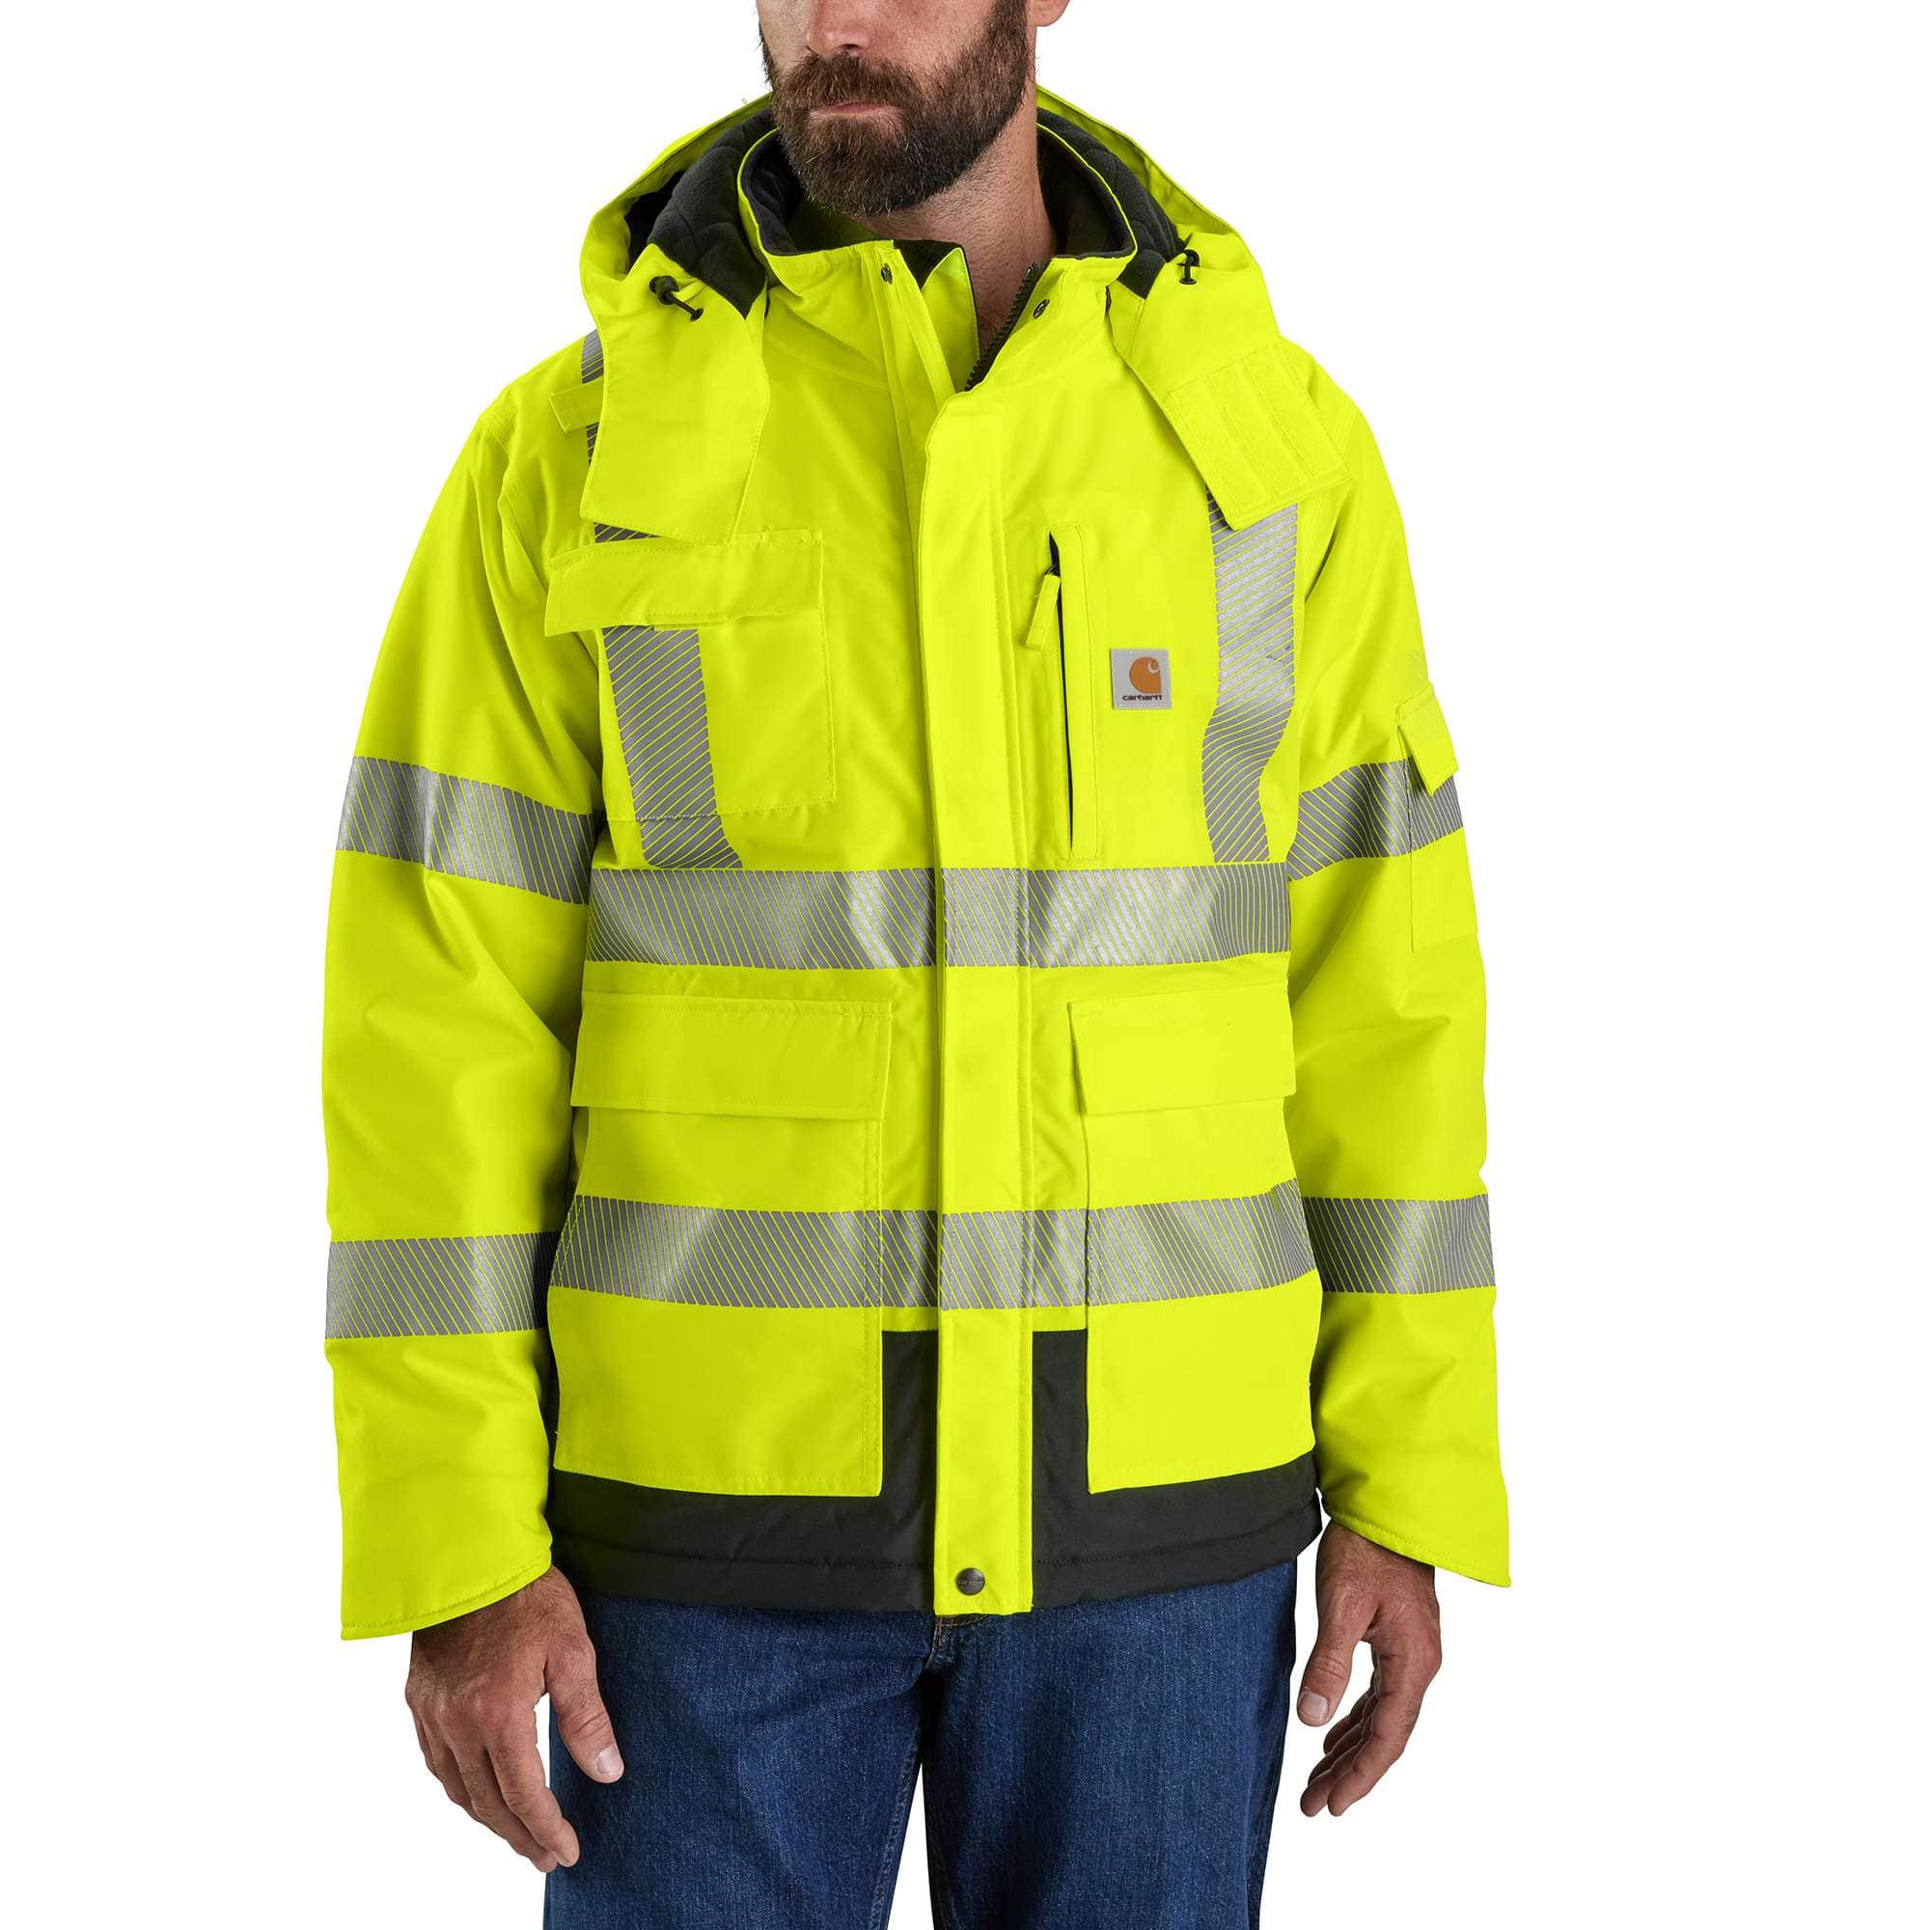 VENDACE Safety Jacket Hi Vis Reflective Winter Jackets for Men Polar Fleece Lining ANSI Class 1 High Visibility Jacket Hoodie(Navy,M)